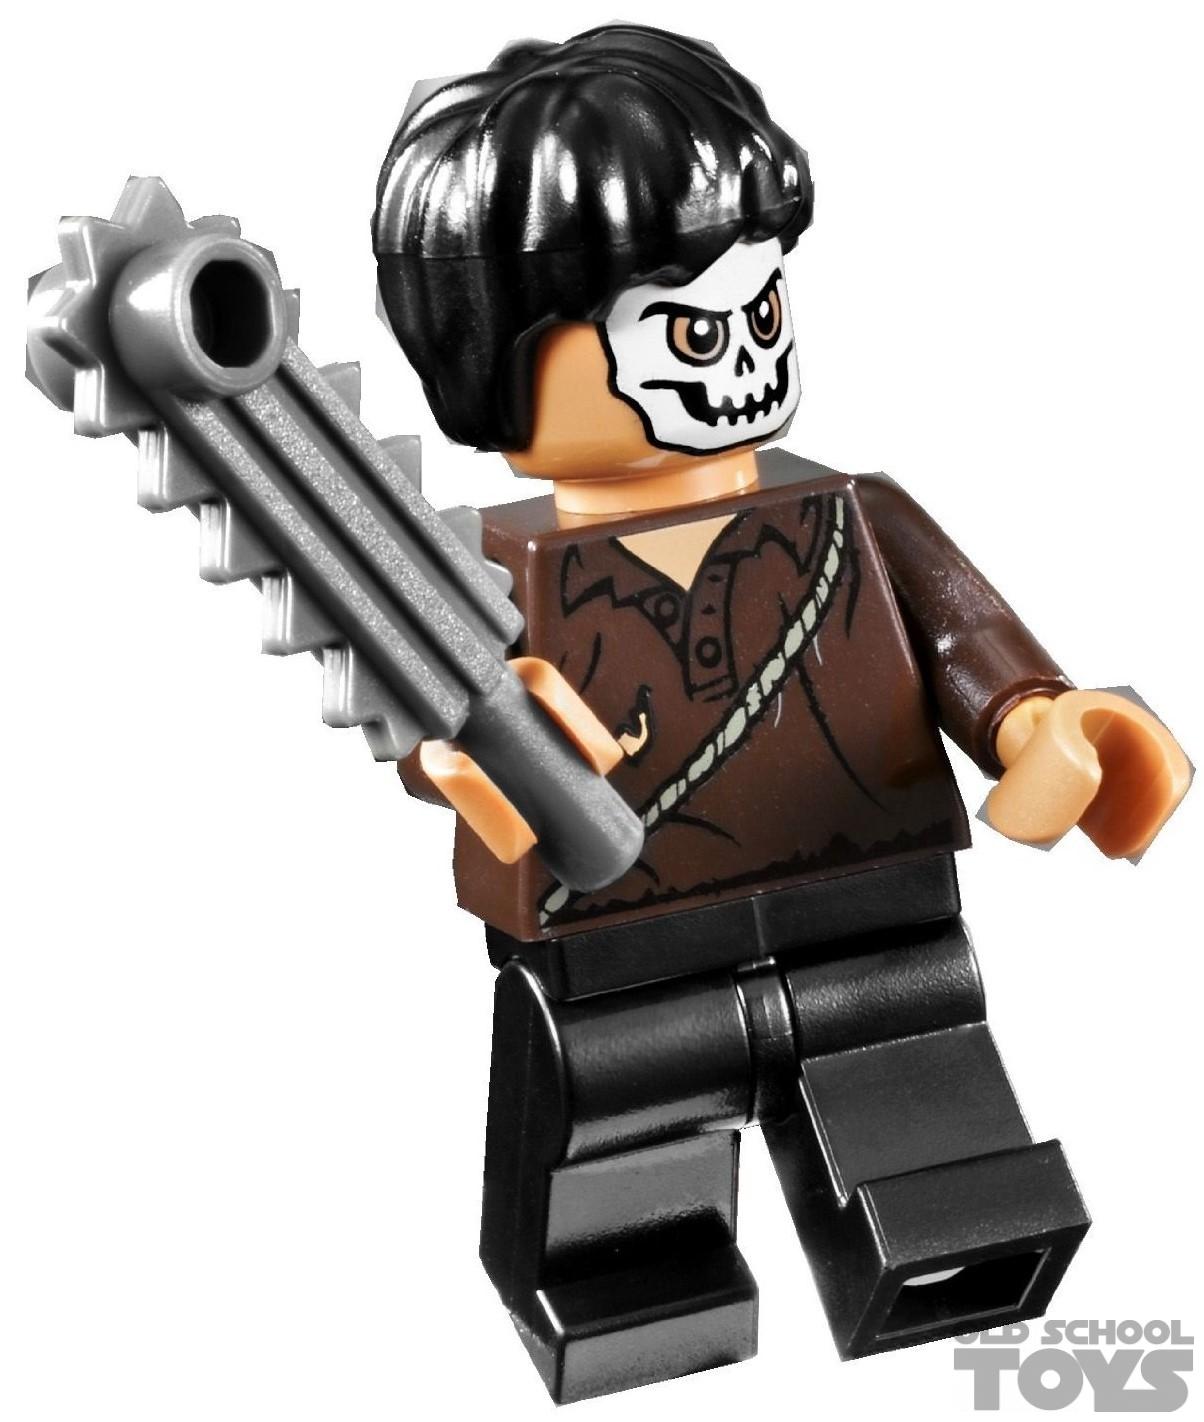 Lego - Indiana Jones - 7196 - Chauchilla Cemetery Battle - 2000-nutid -  Catawiki